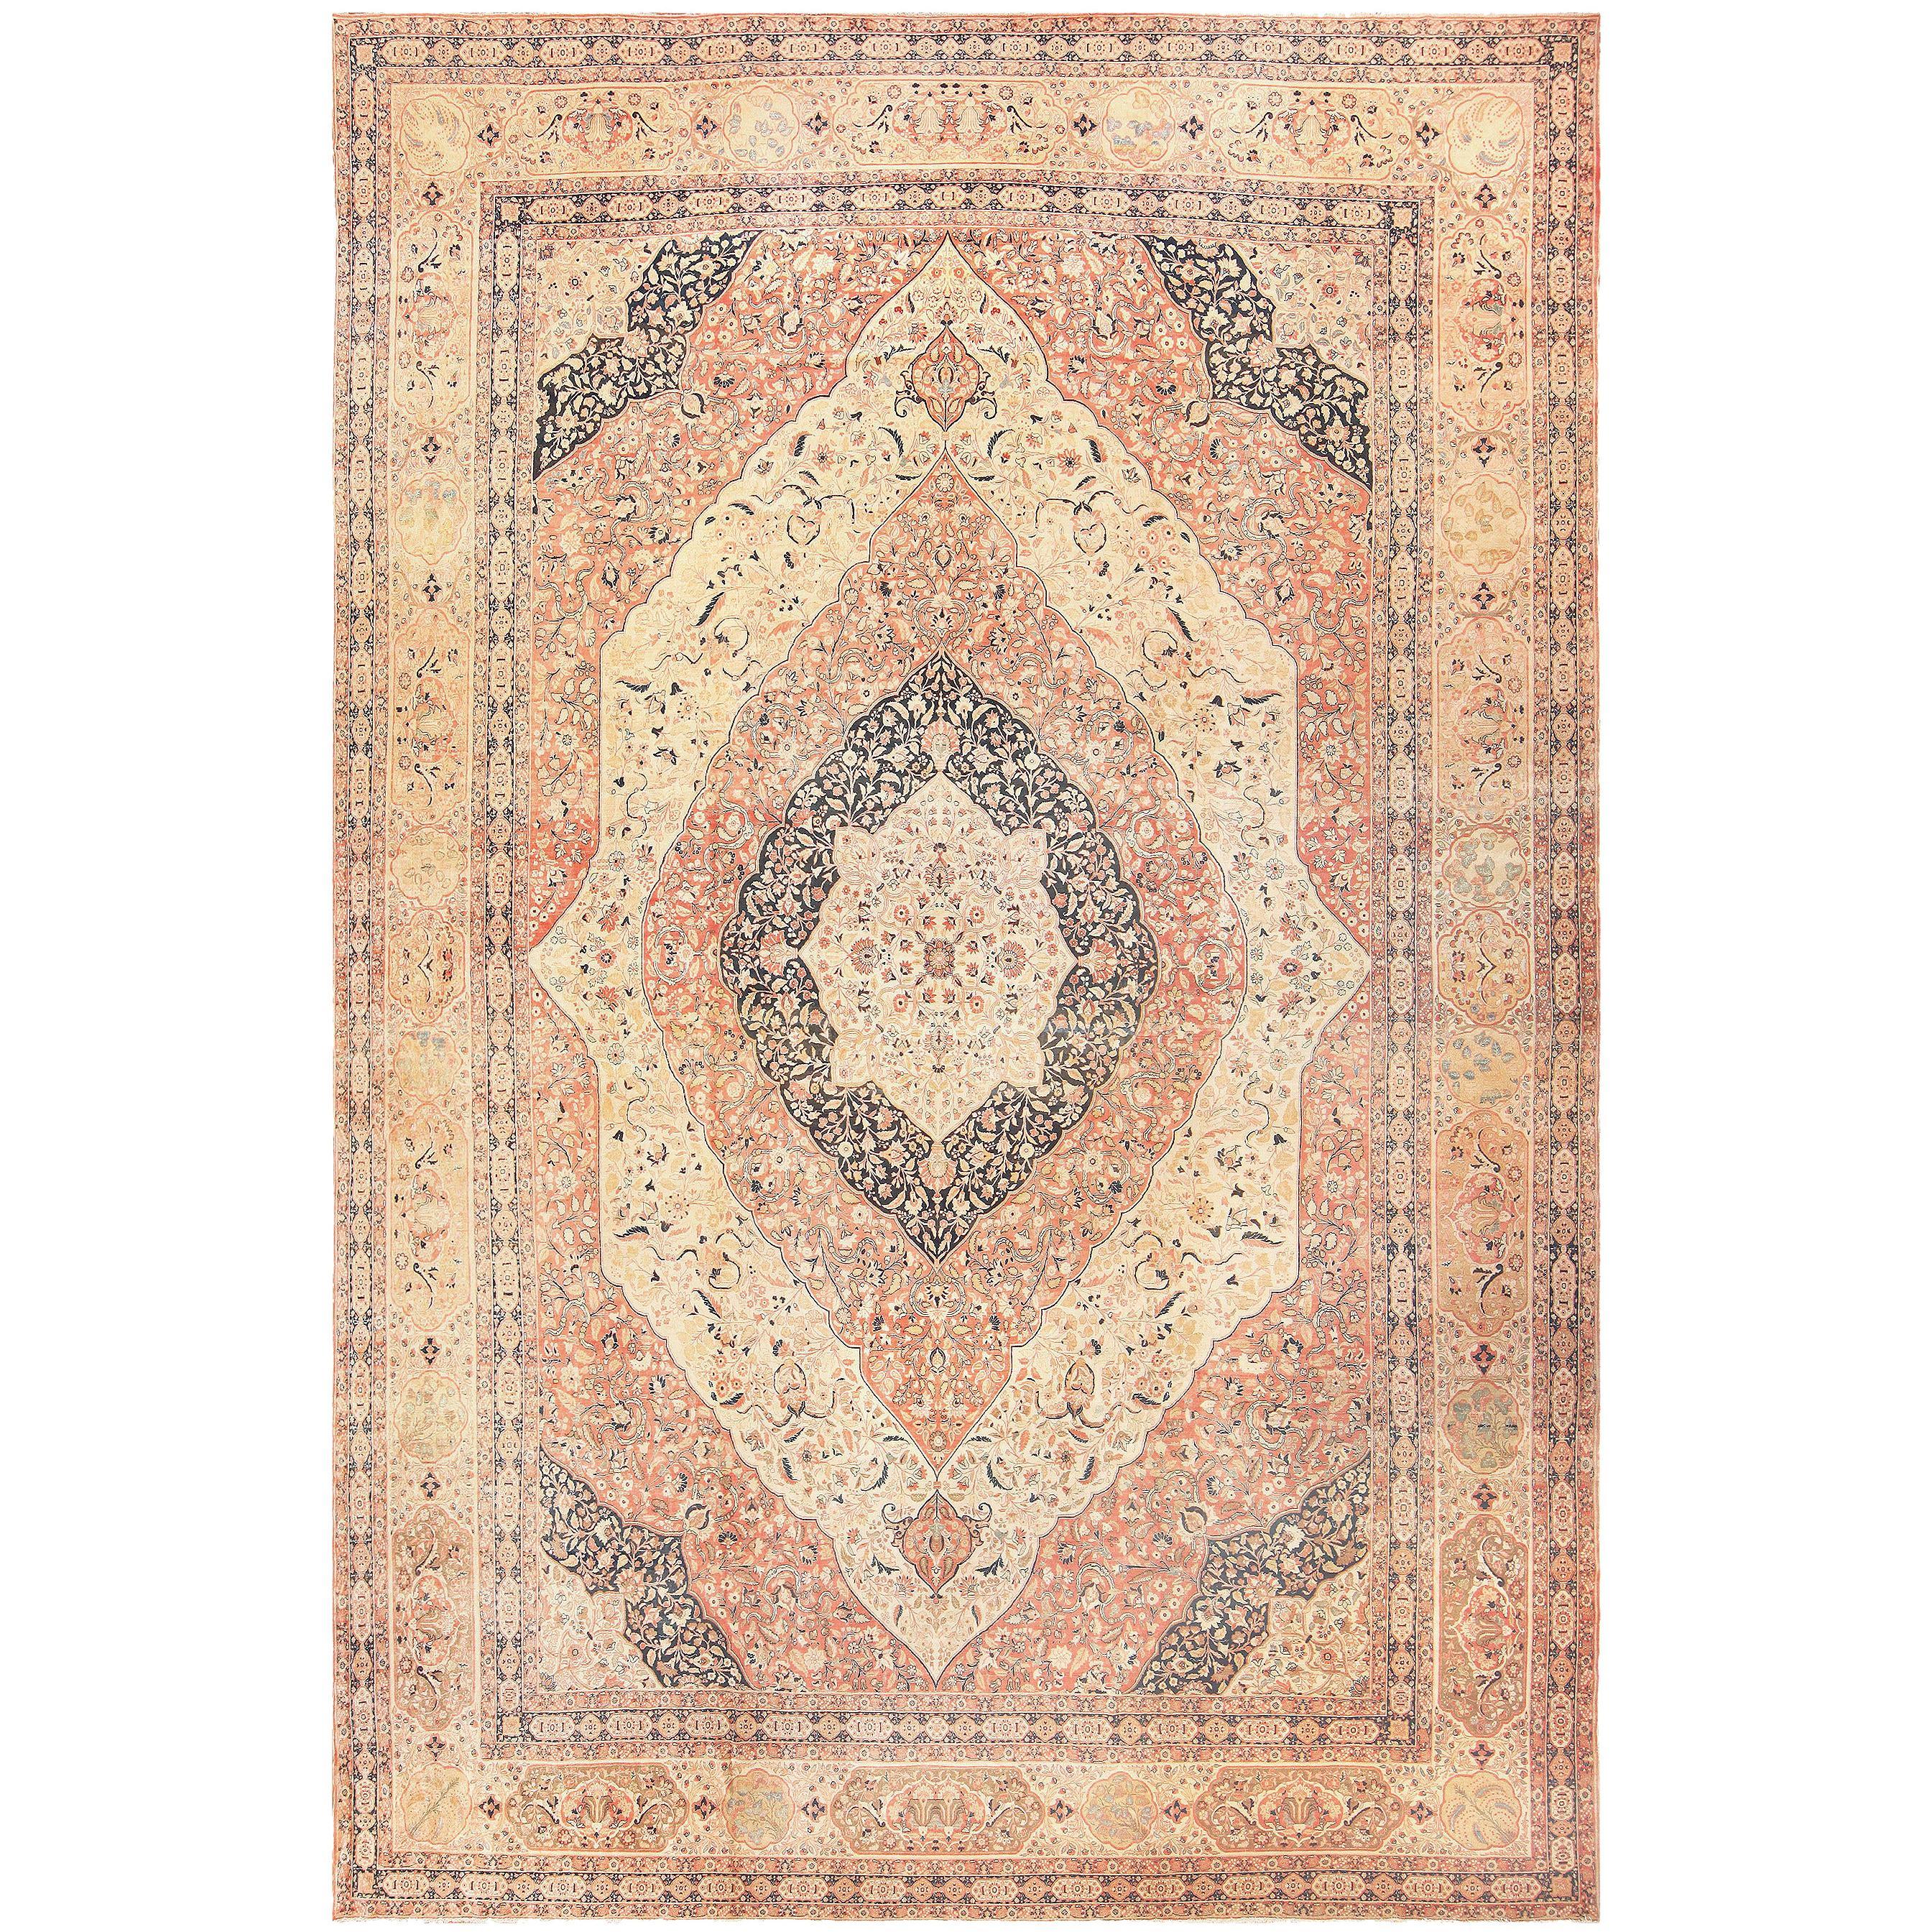 Antique Tabriz Persian Carpet by Haji Jalili. 16 ft x 25 ft 4 in